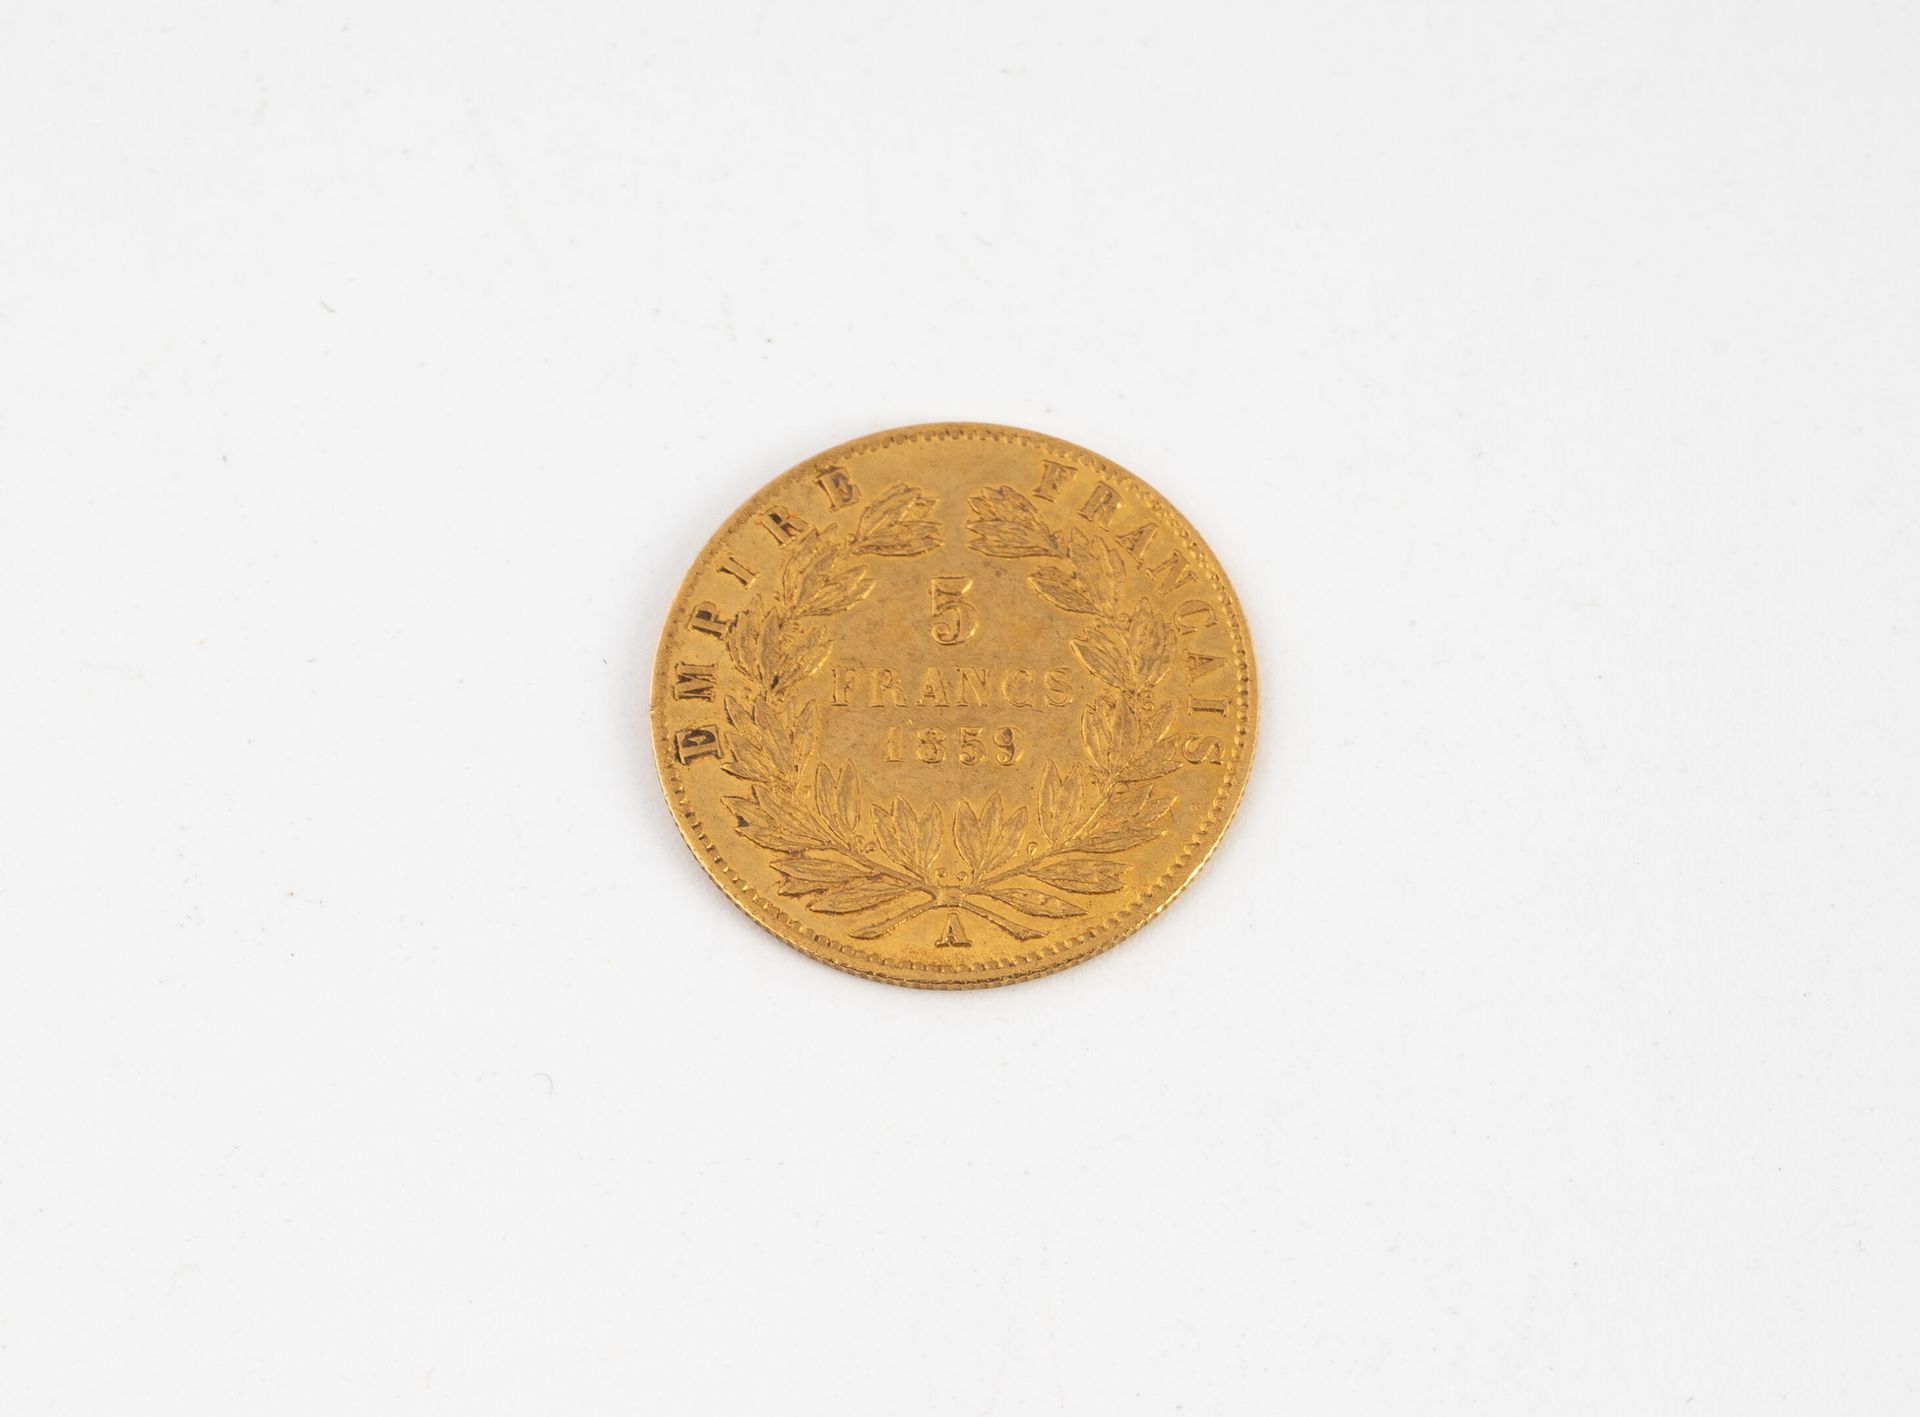 FRANCE 1859年拿破仑三世5法郎金币。
重量：1,59克。
有划痕和磨损。